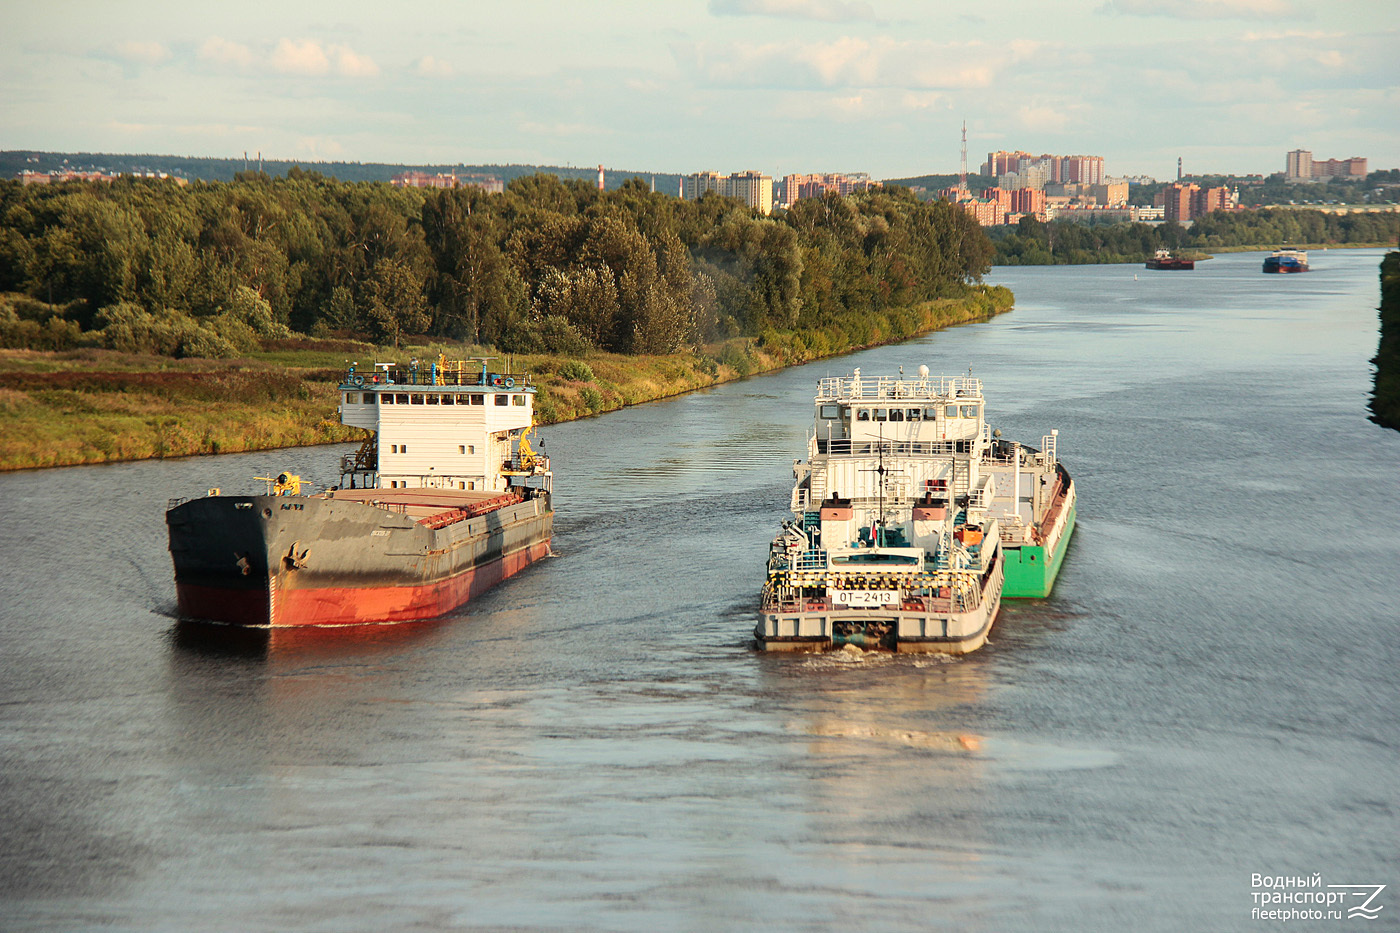 Омский-20, ОТ-2413, Волжская-6. Moscow Canal